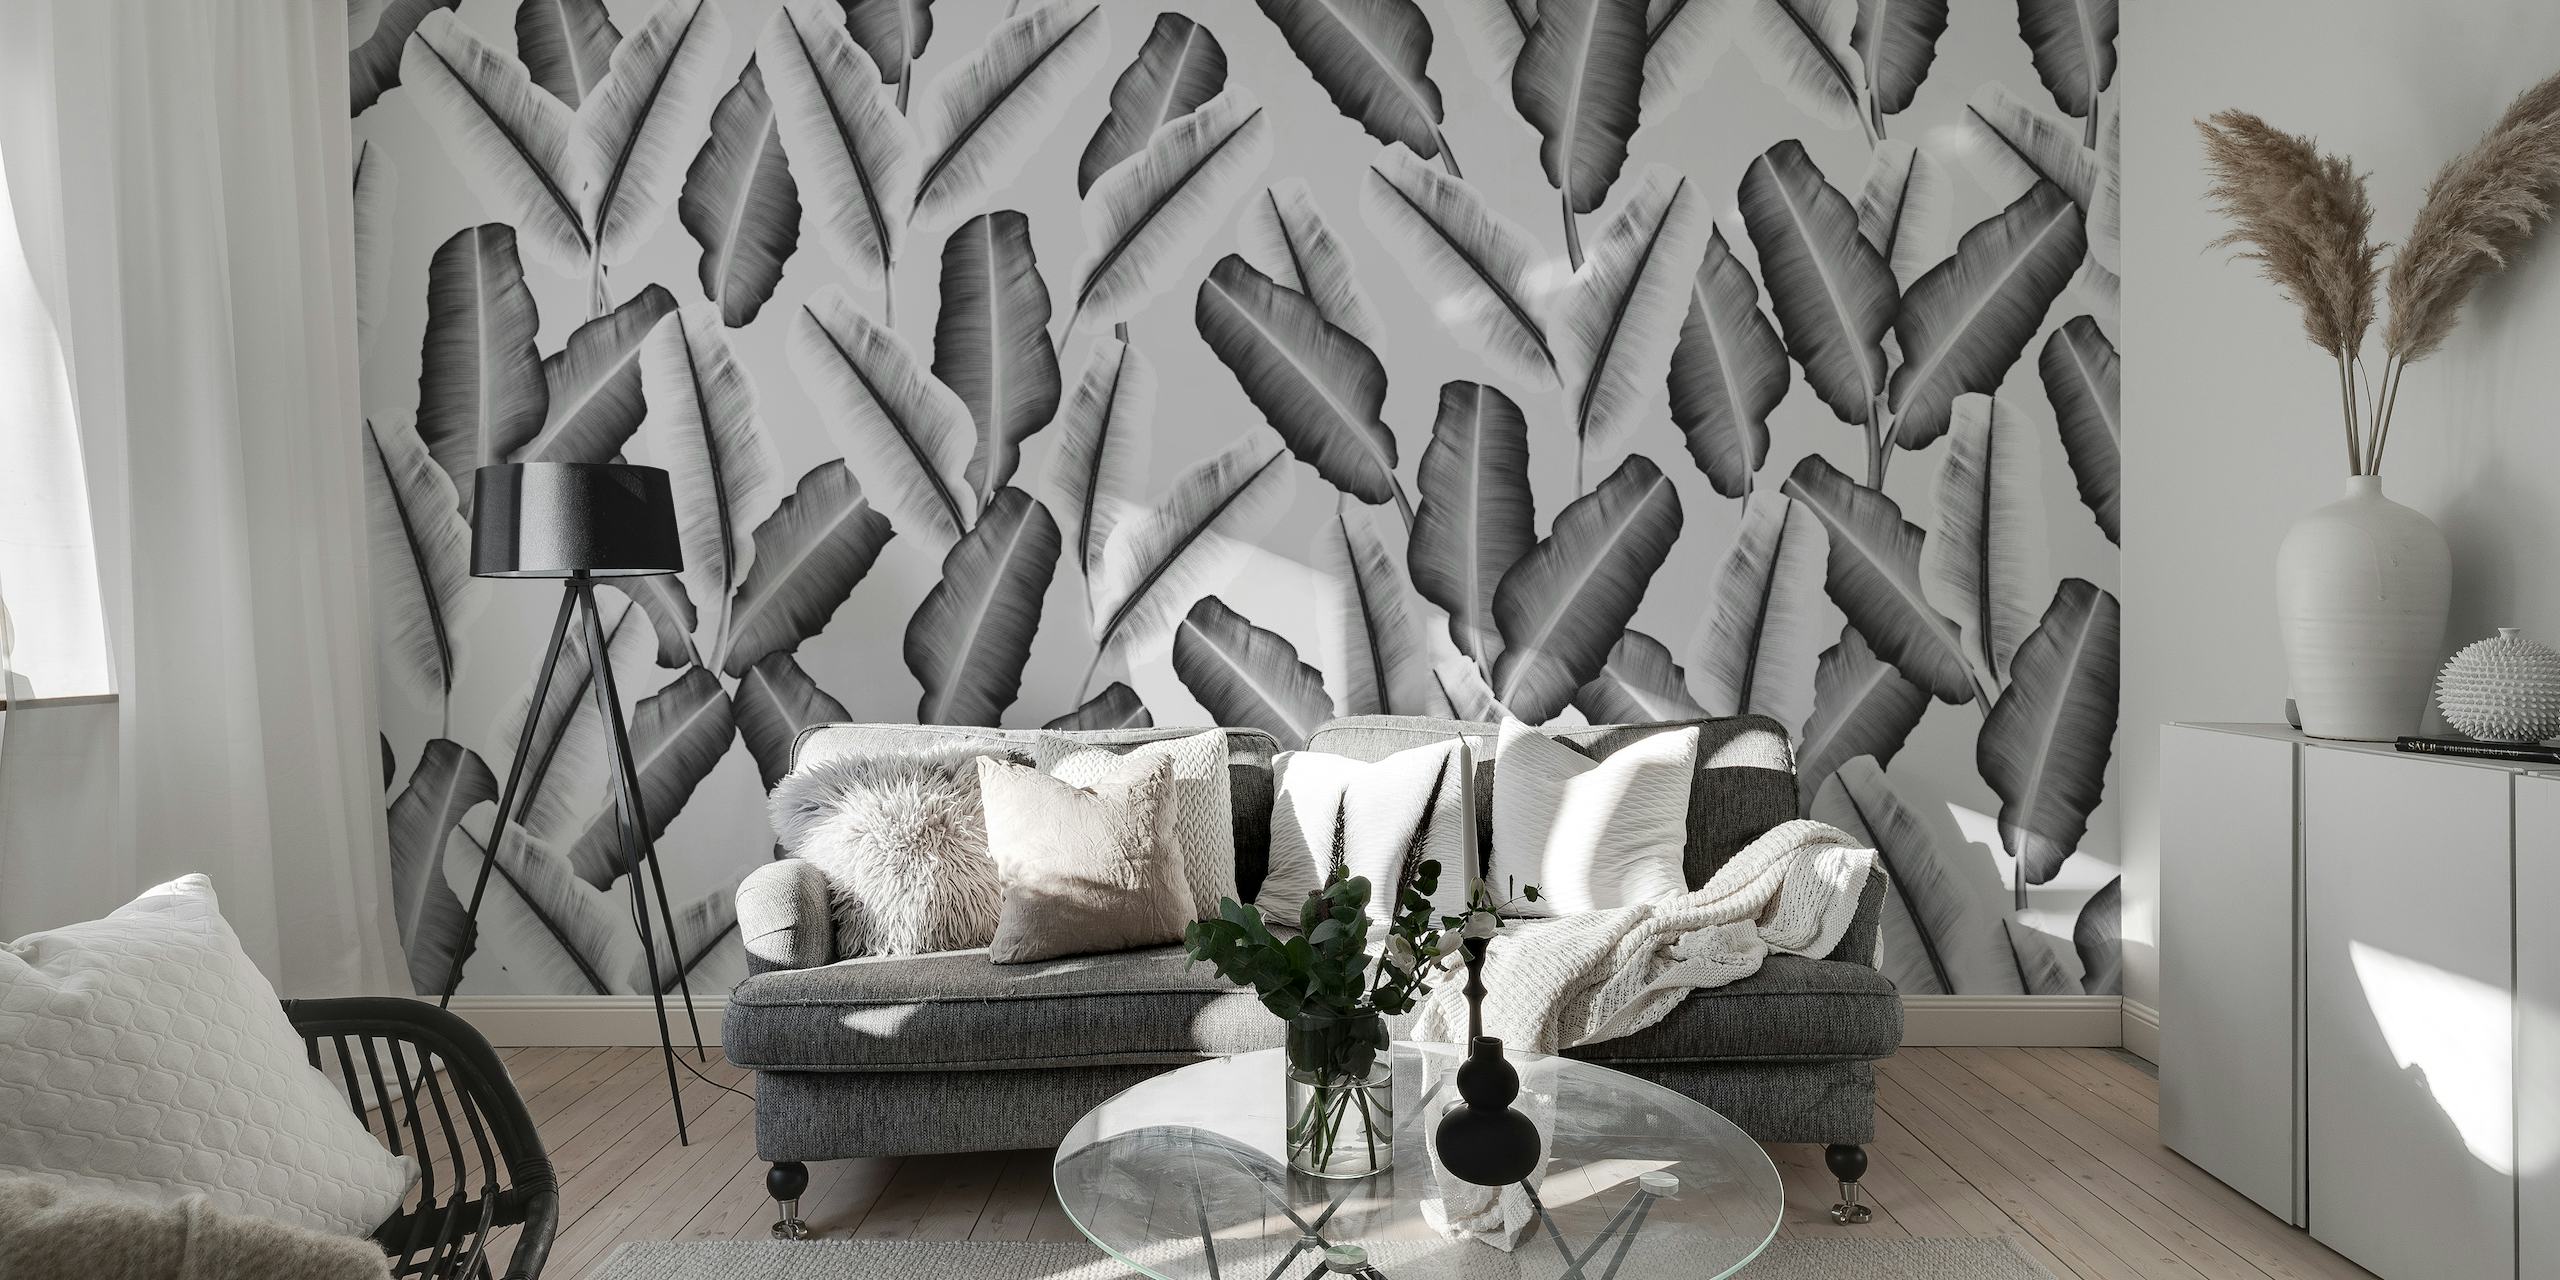 Stylish grey-scale tropical banana leaf pattern wall mural